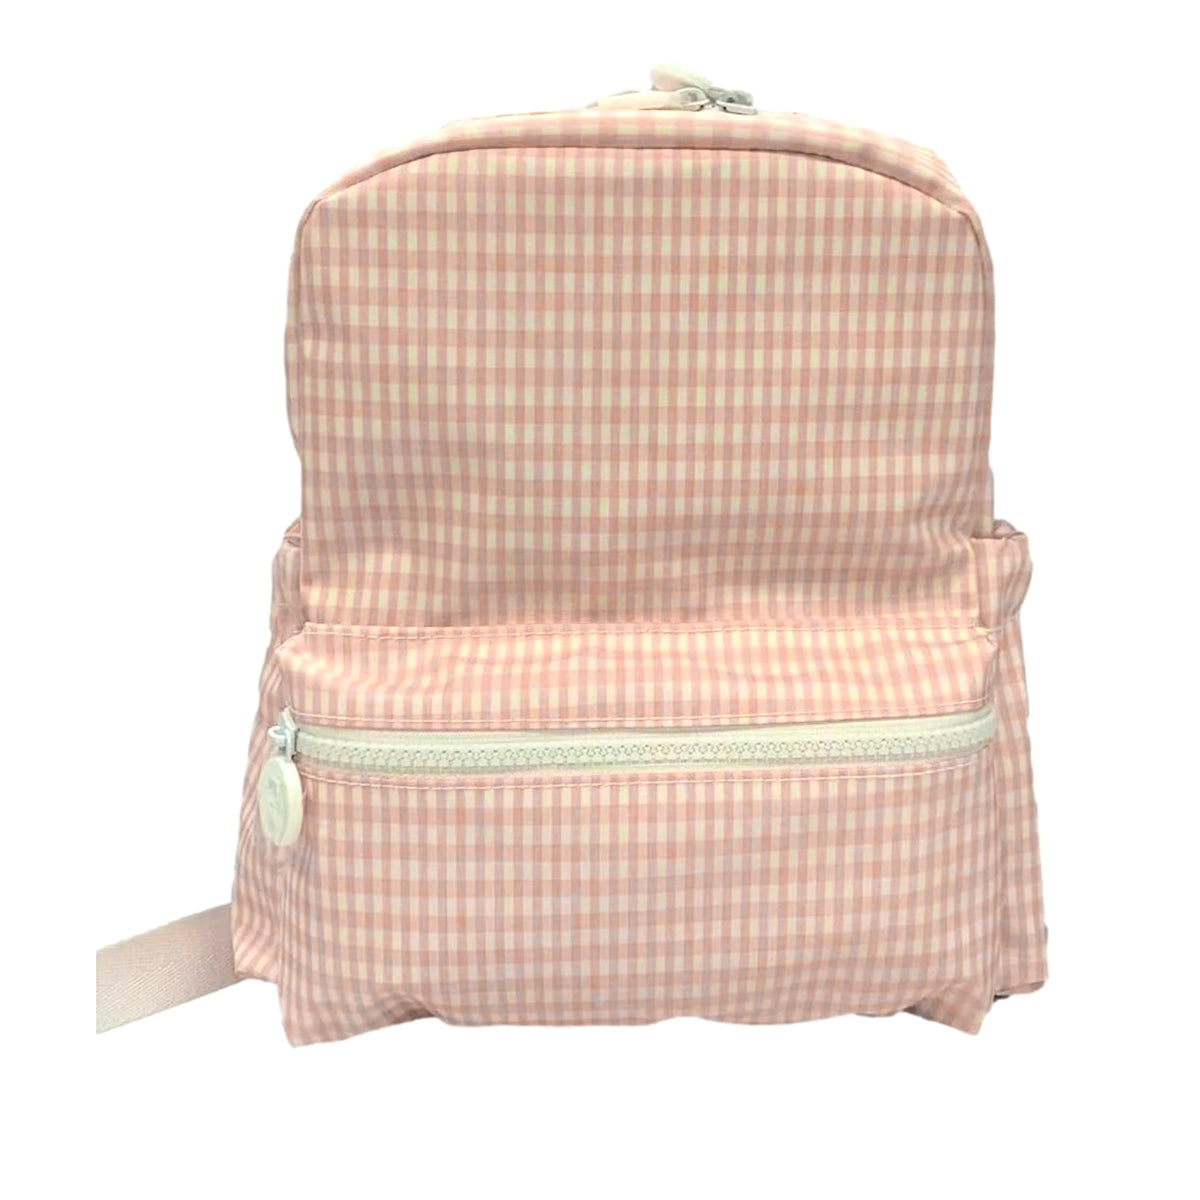 TRVL Design Toddler Backpack Taffy Pink Check Mini Backer